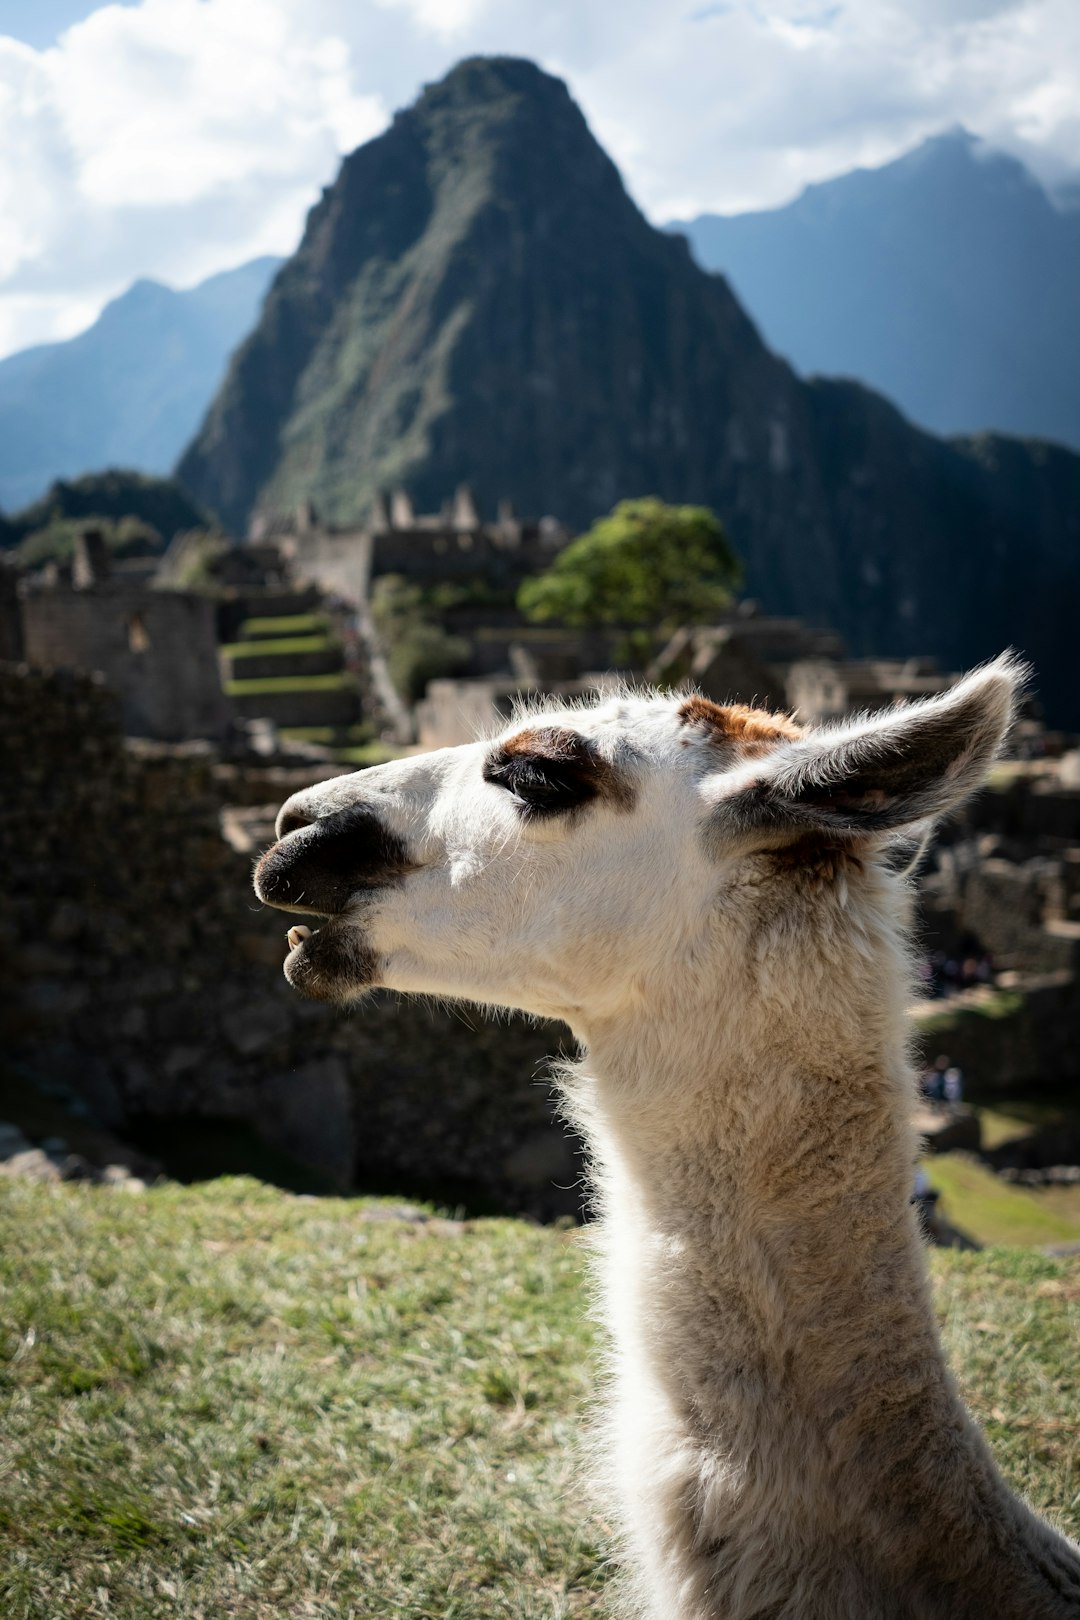 Wildlife photo spot Mountain Machu Picchu Machu Picchu